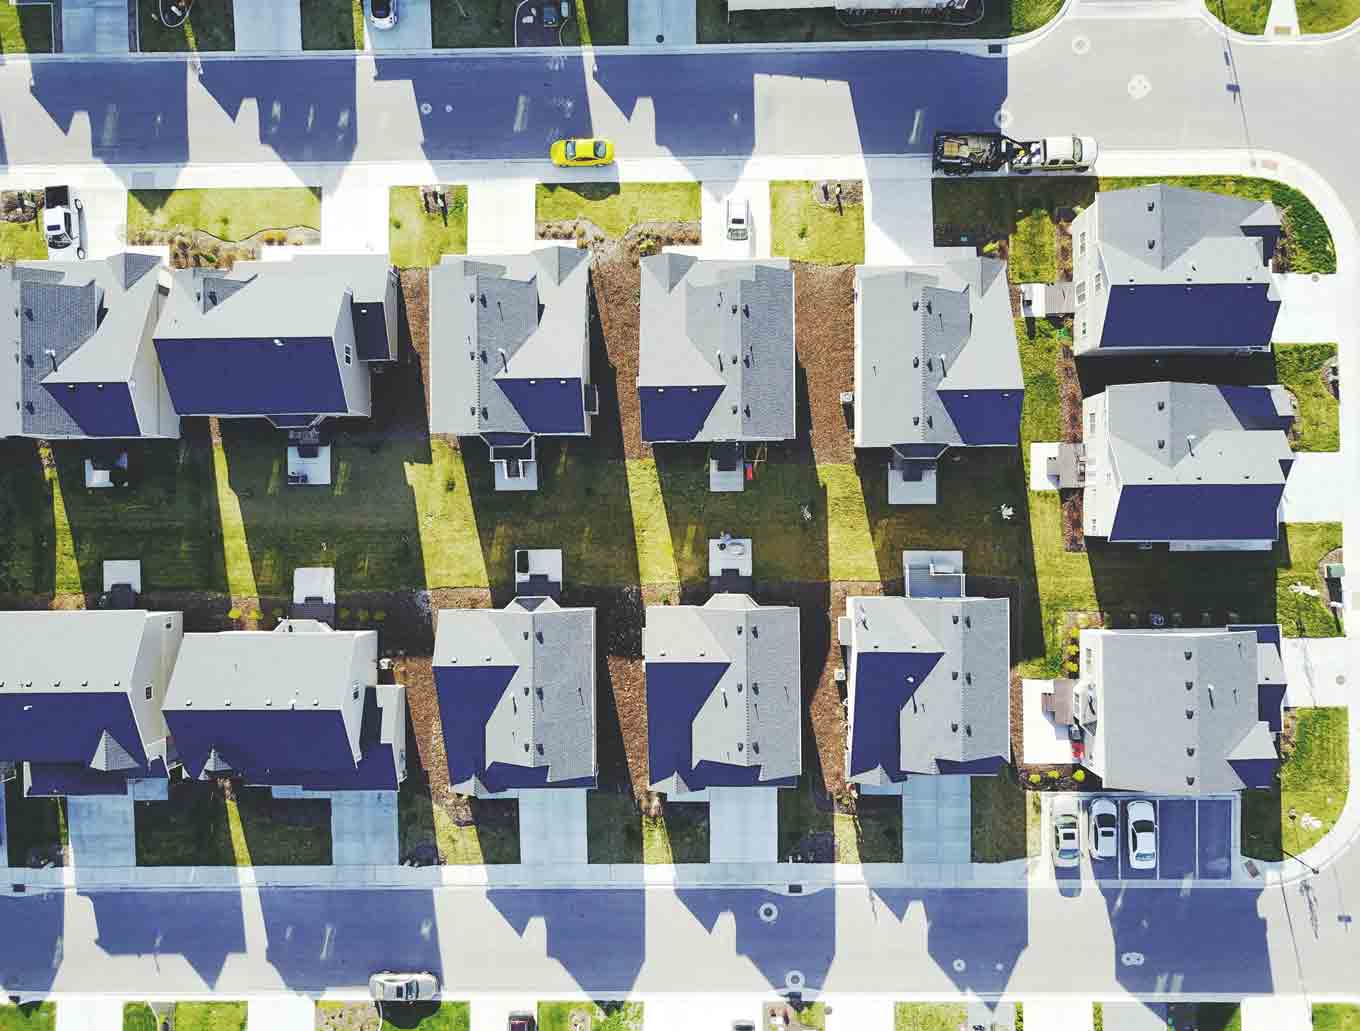 Solar housing development in America